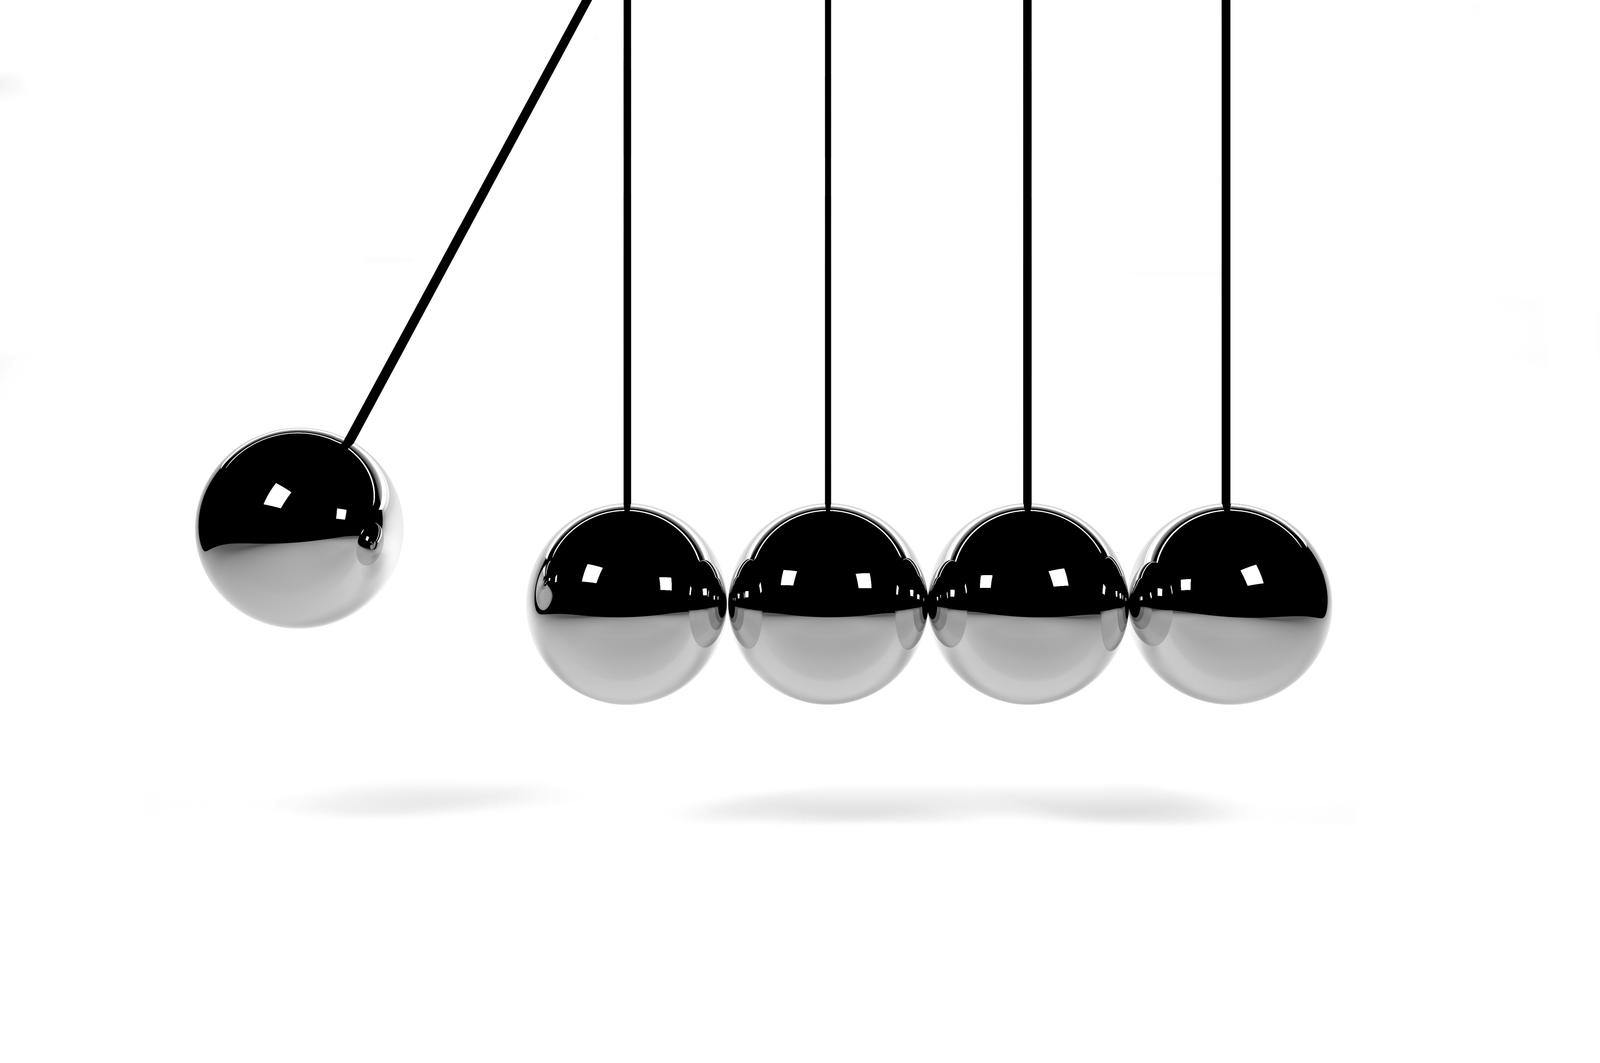 newton's cradle hanging chrome balls on white 3D render